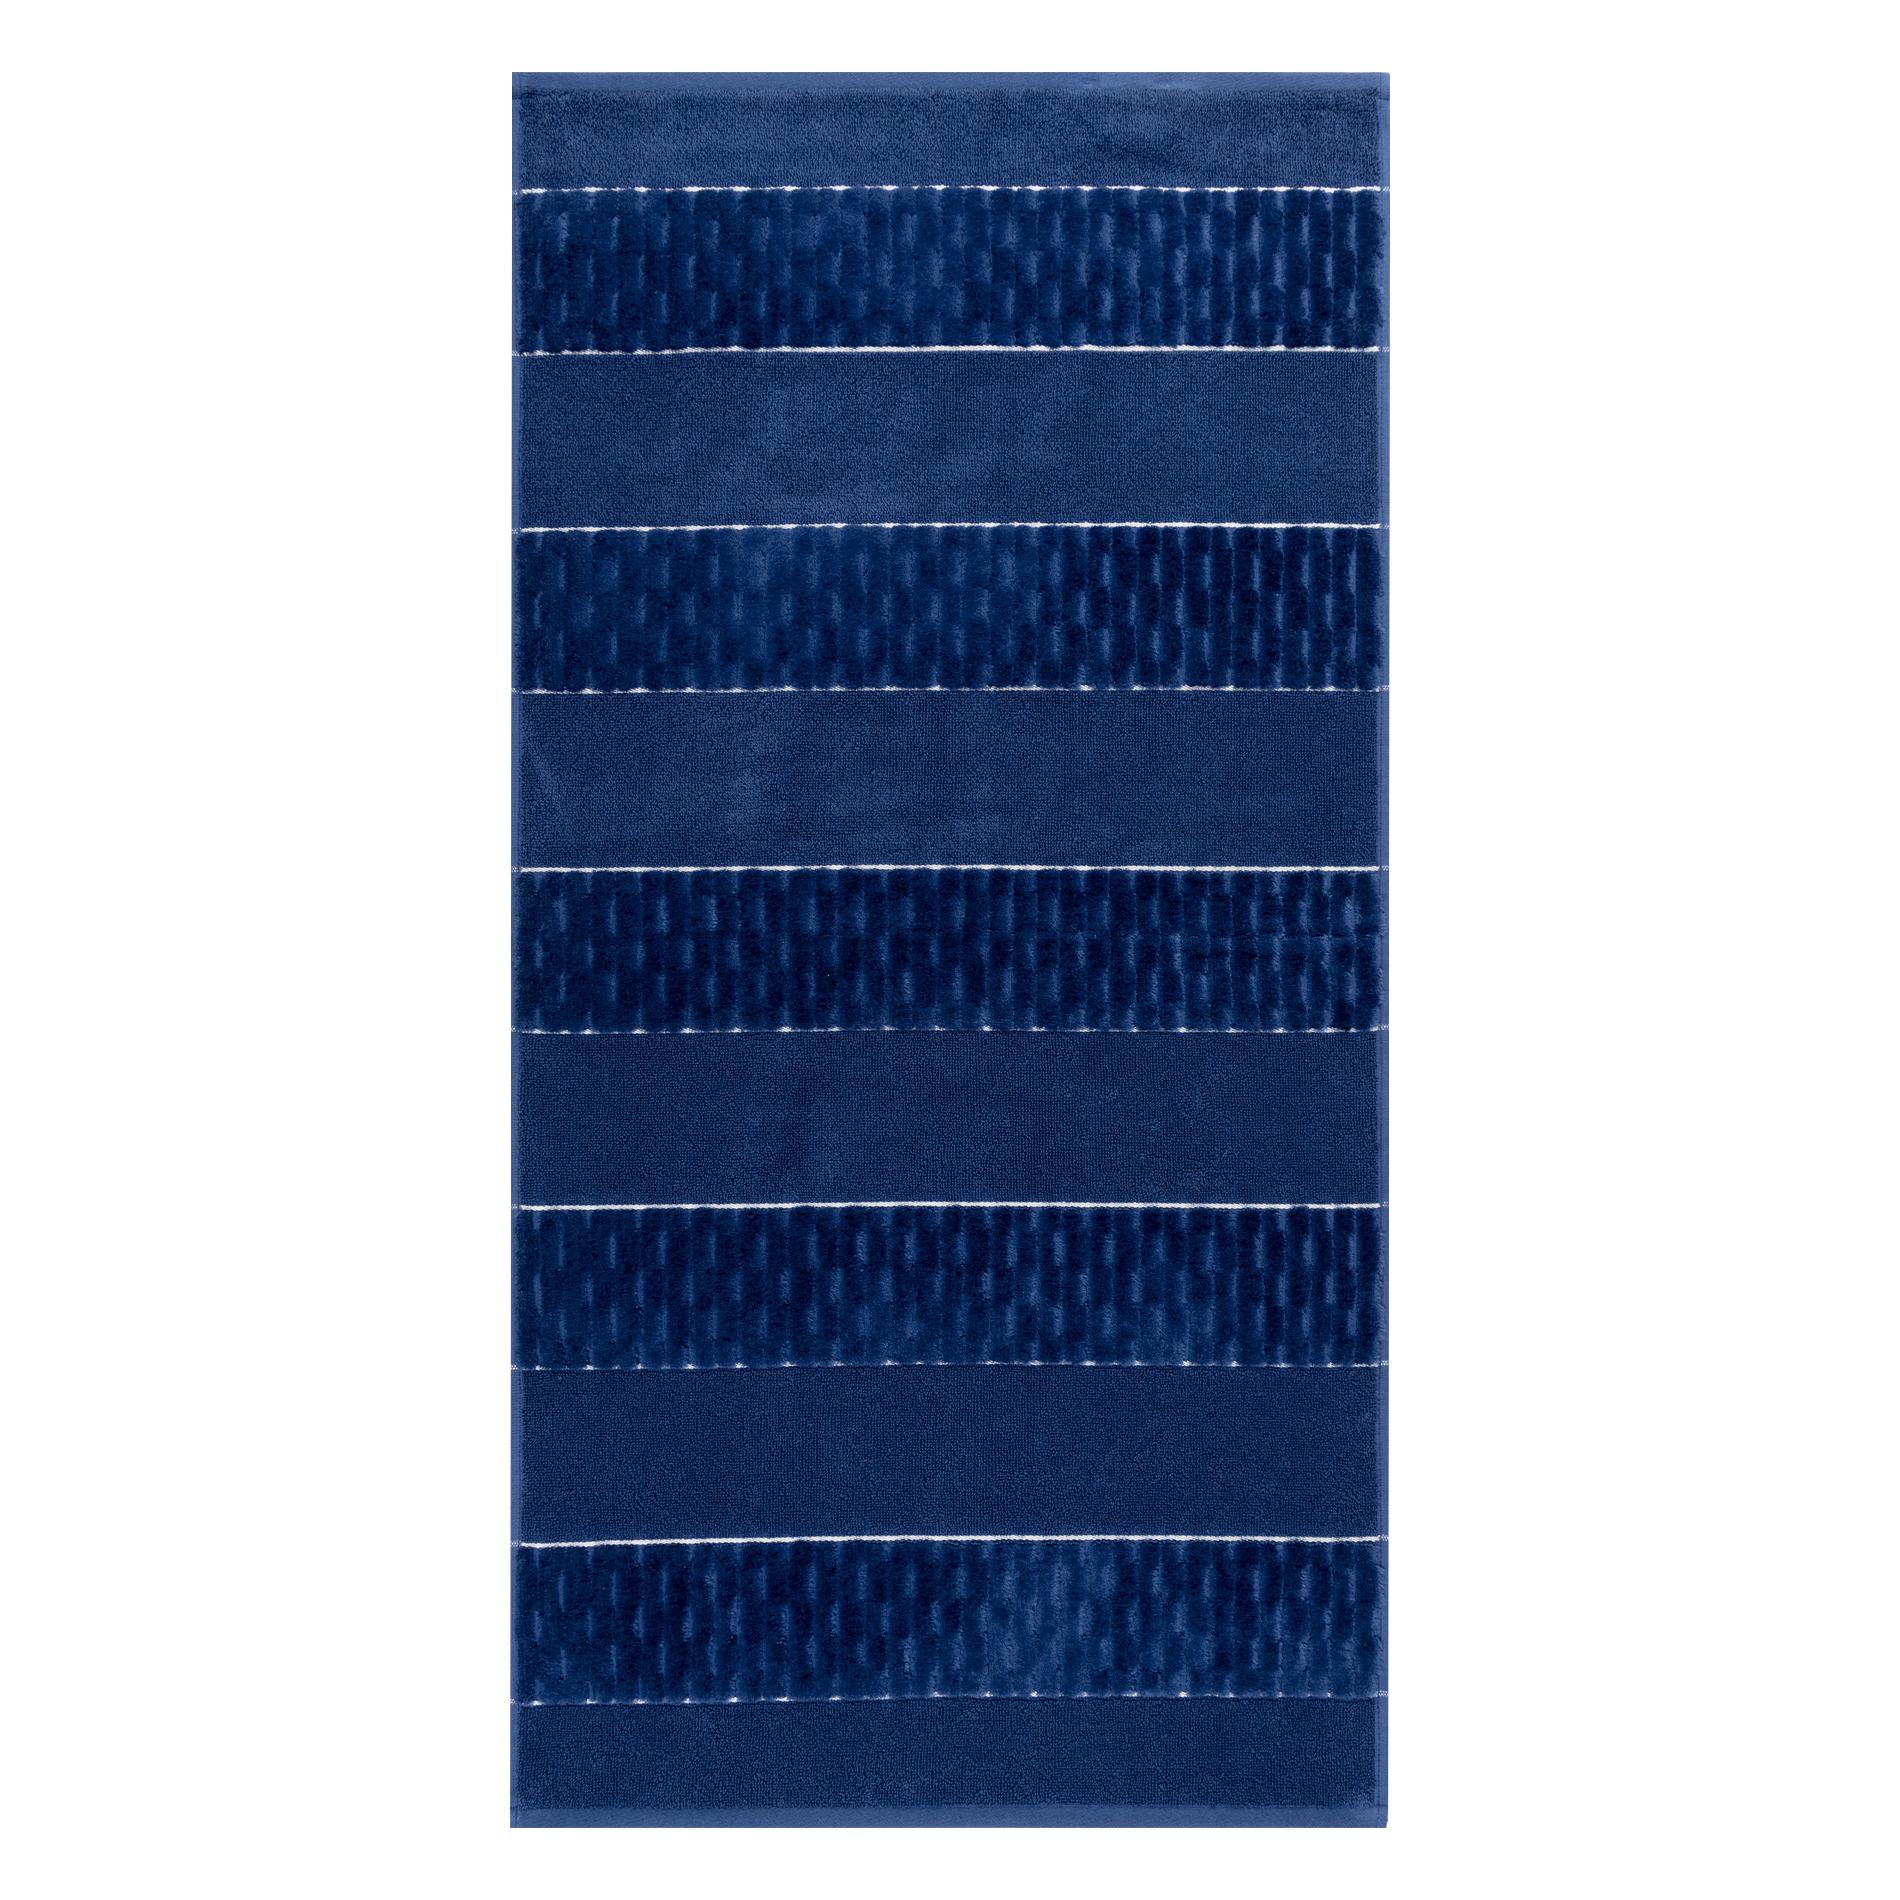 Махровое полотенце Cleanelly Esteta синее 50х100 см полотенце махровое cleanelly порфидо 50х100 бежевый